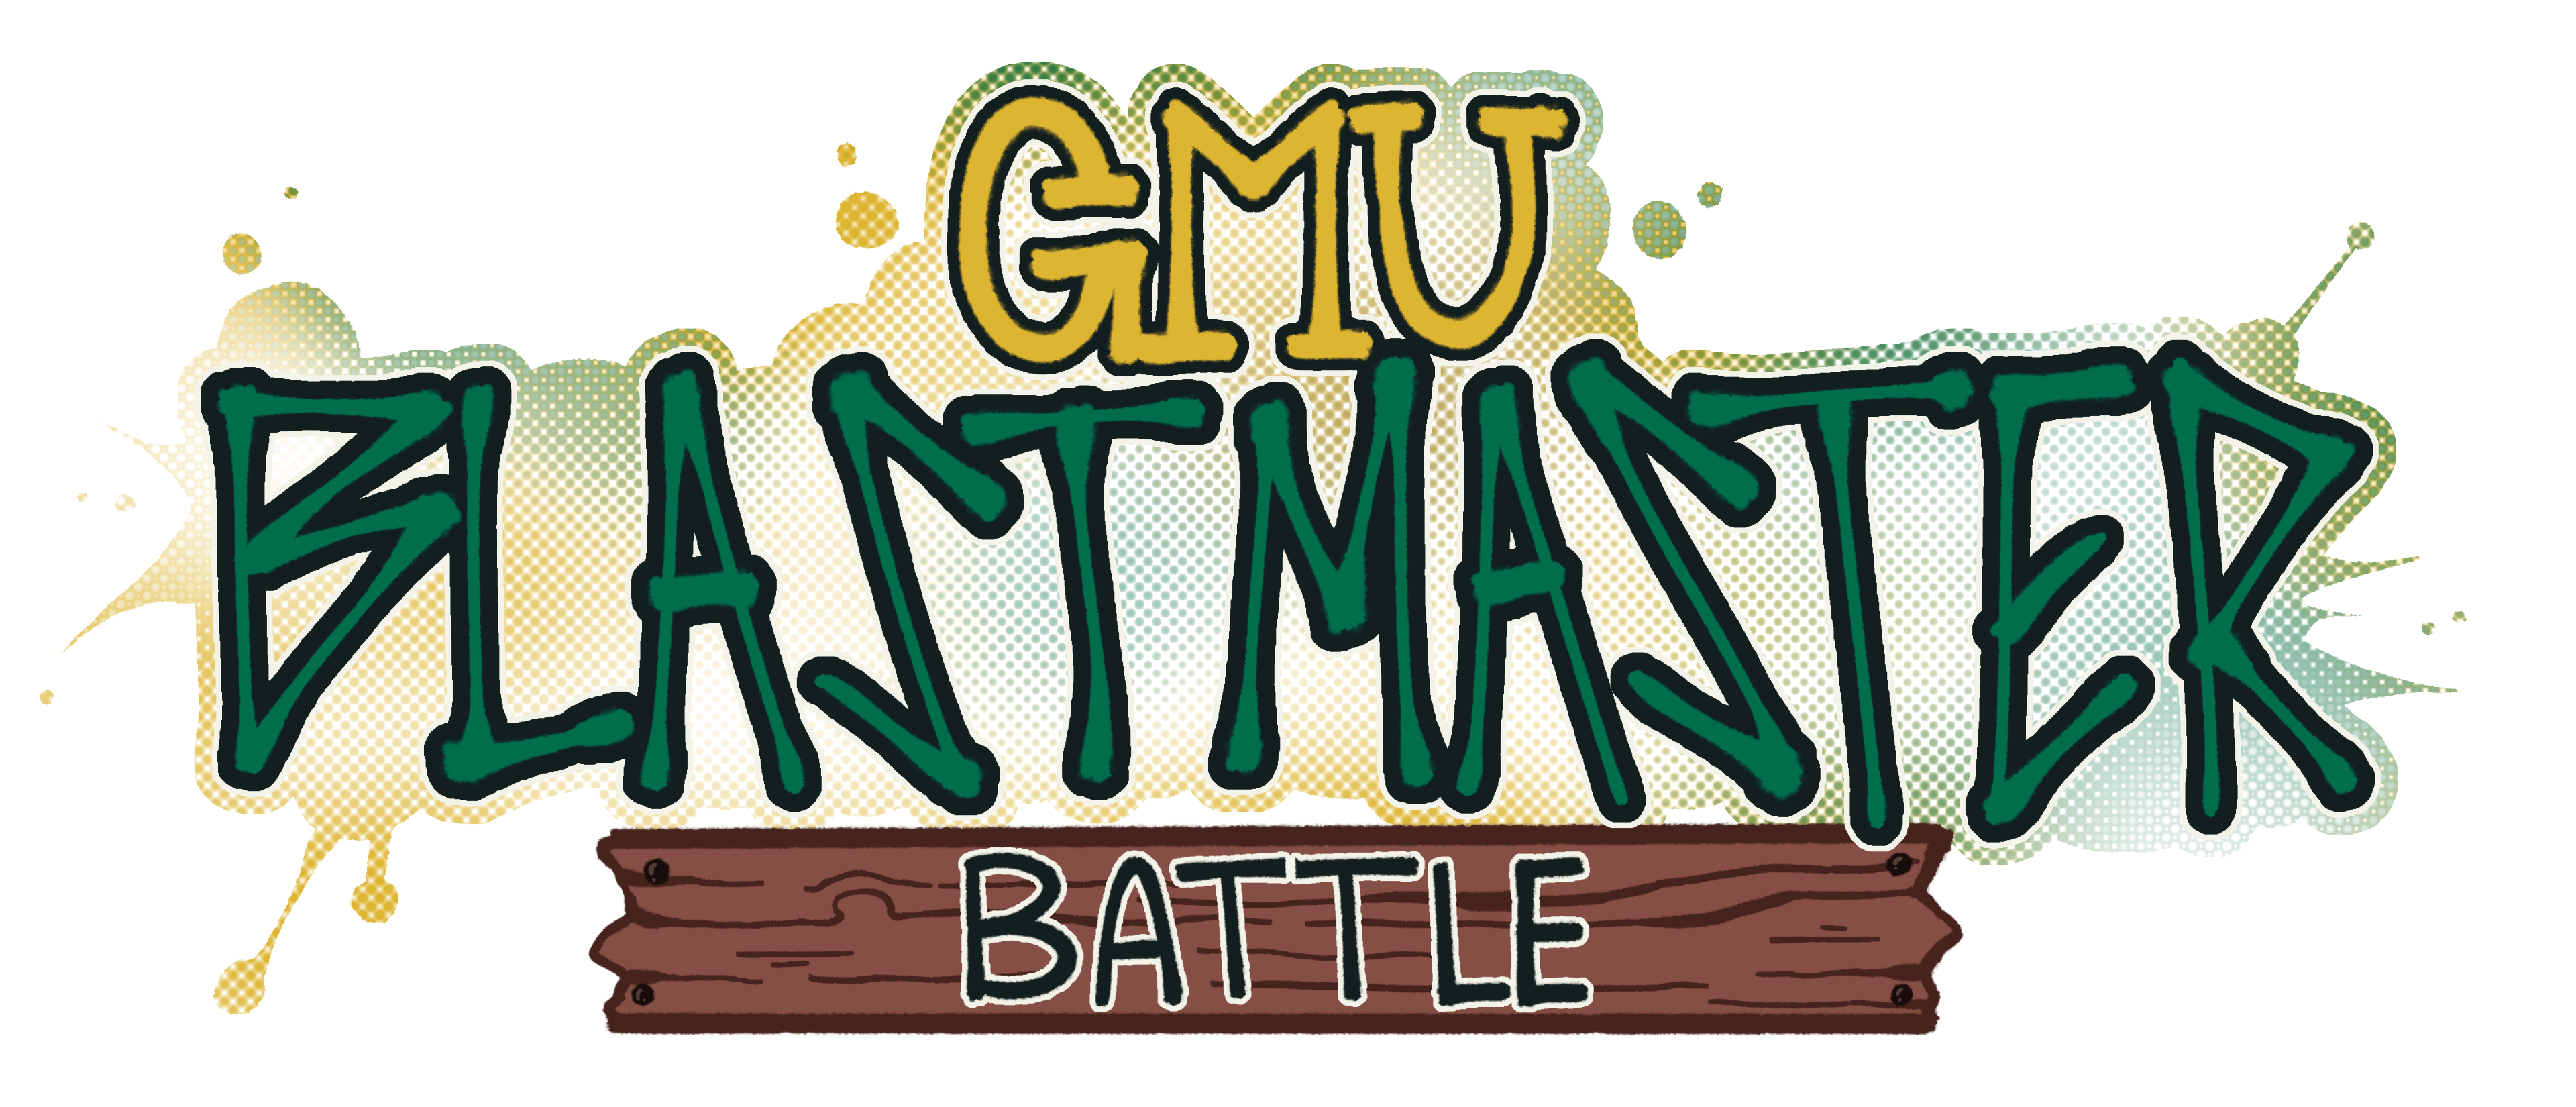 GMU Blastmaster Battle